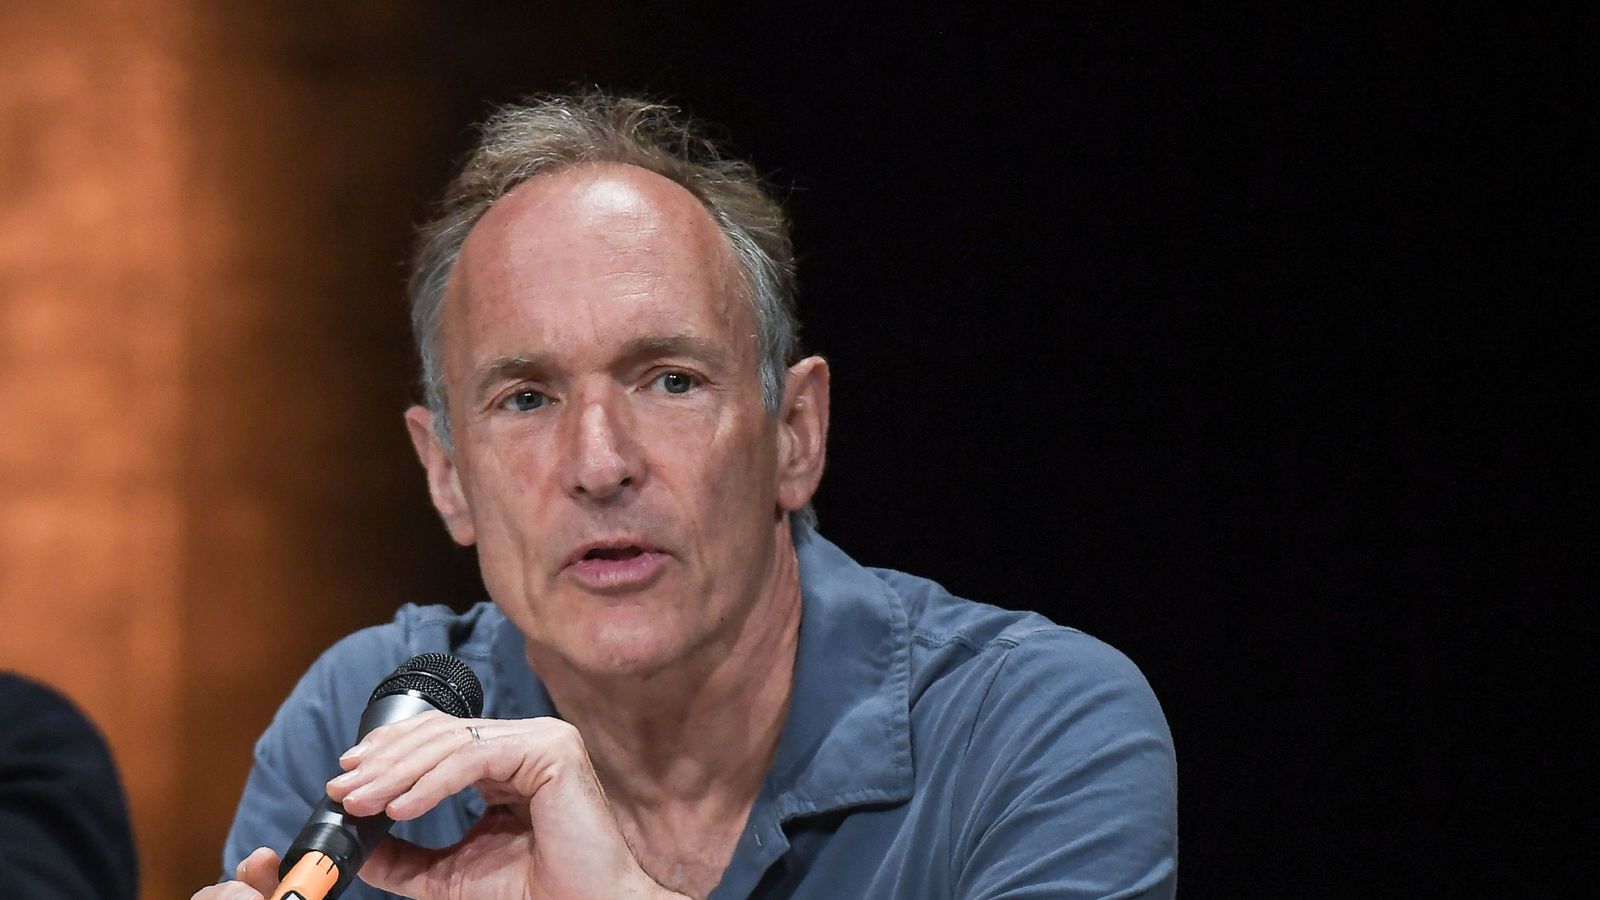 World wide web creator Tim Berners-Lee targets fake news - BBC News